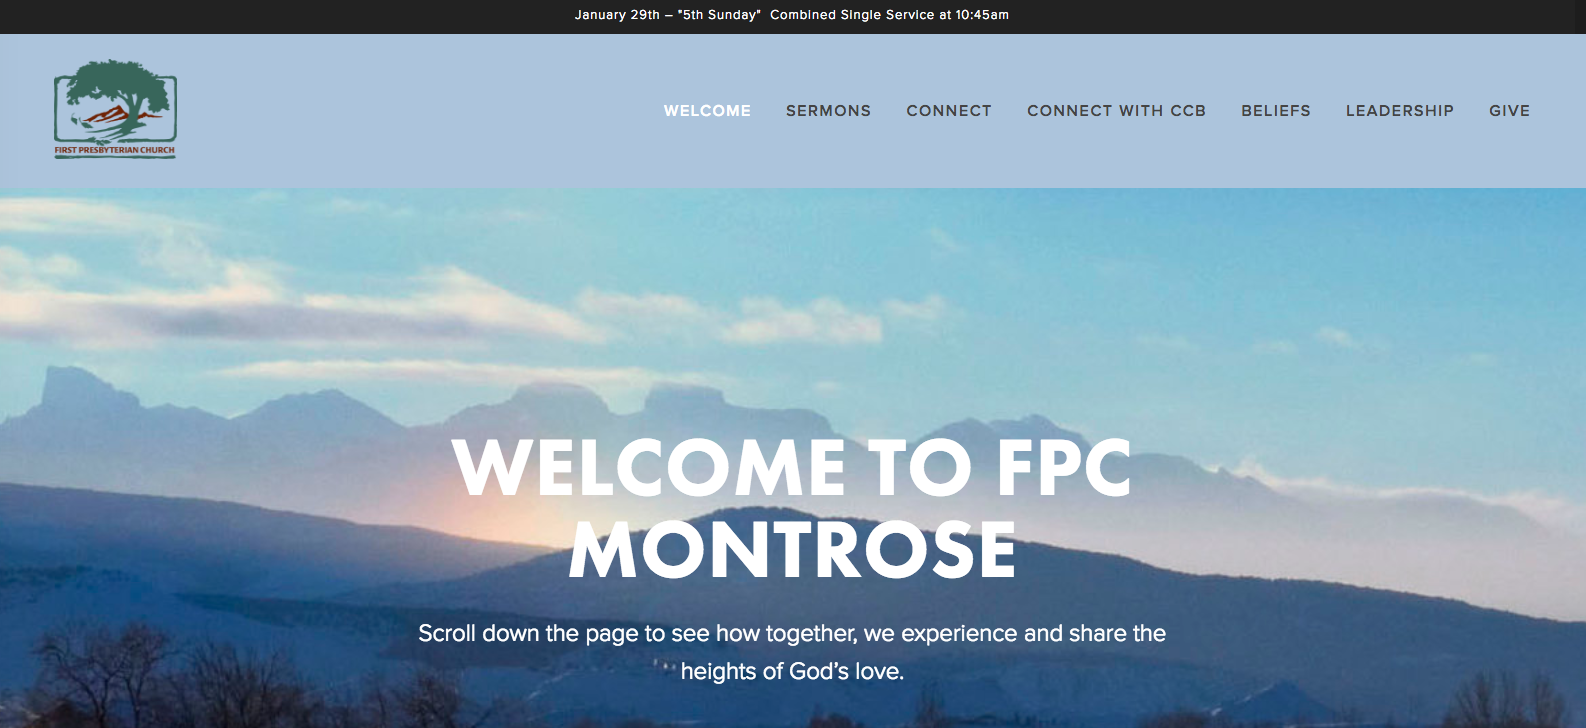 FPC-montrose.png